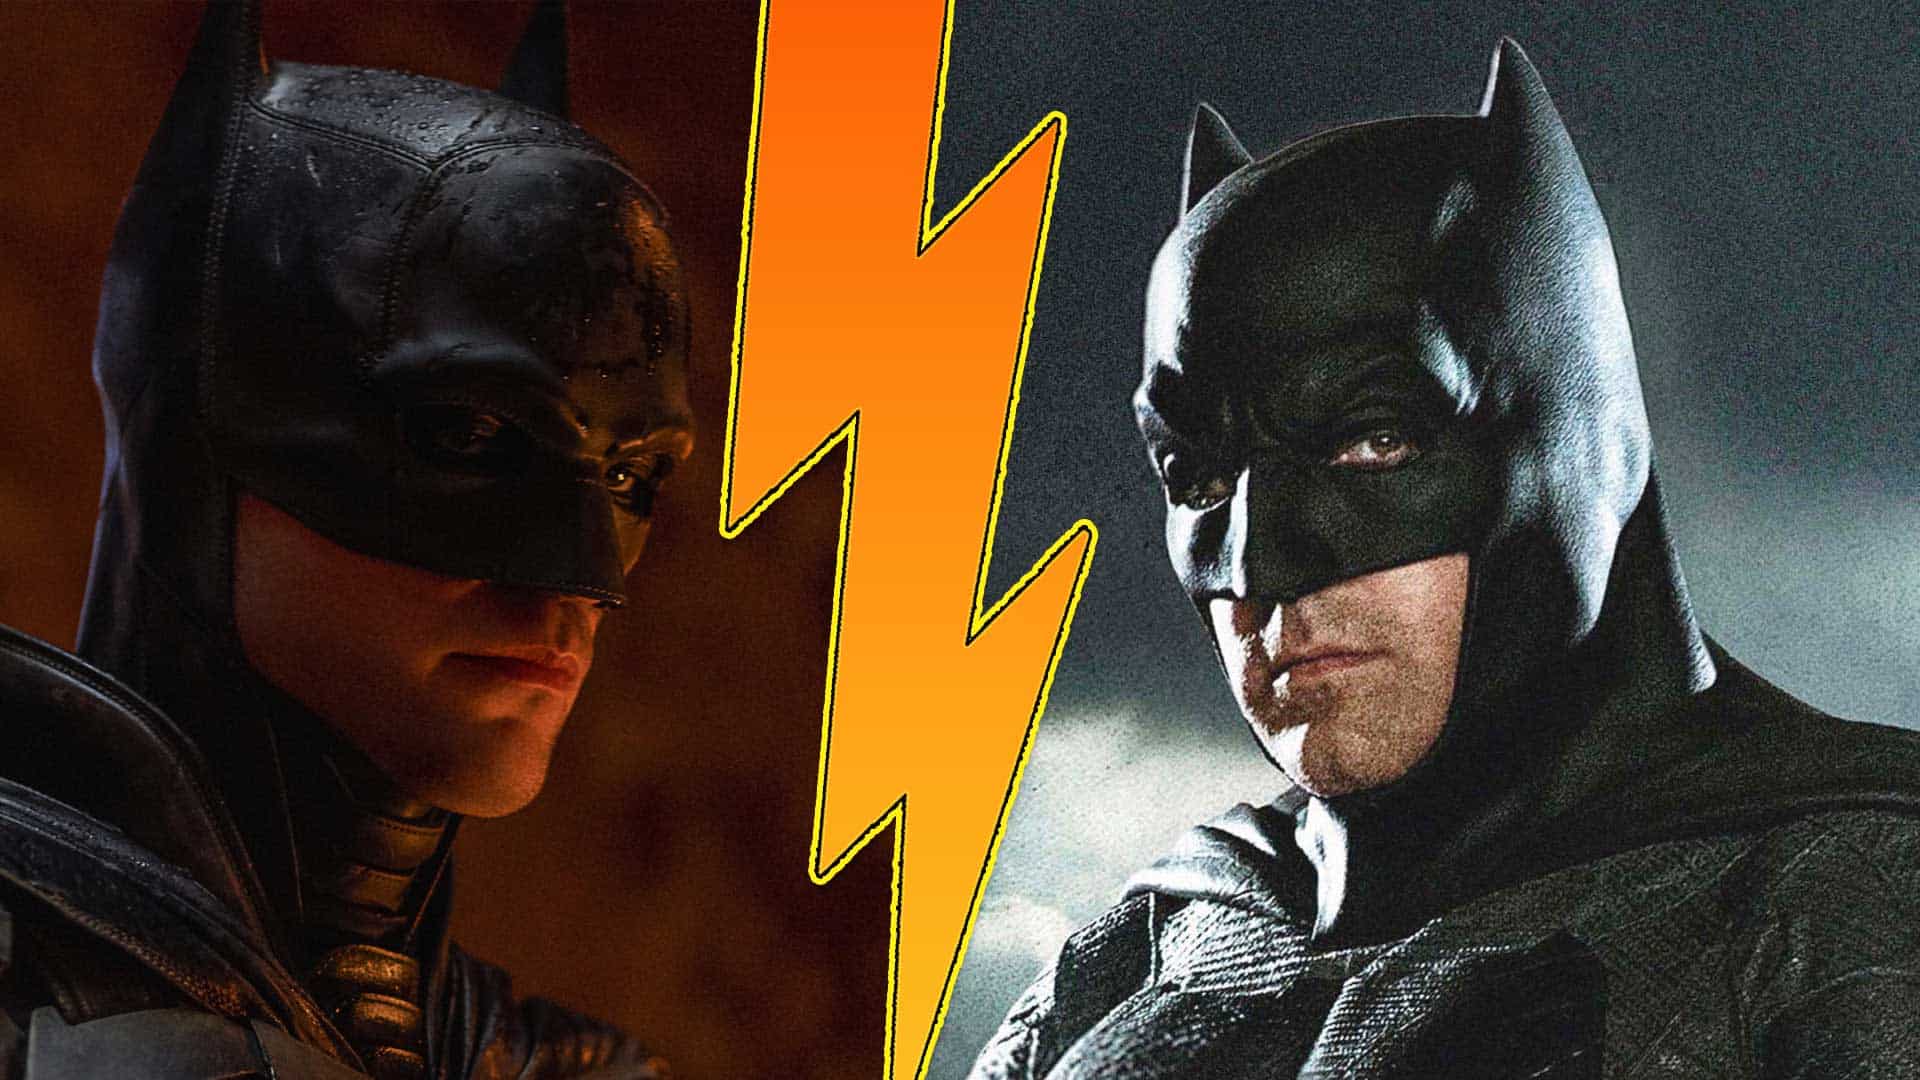 Matt Reeves' Batman Vs. Zack Snyder's Batman